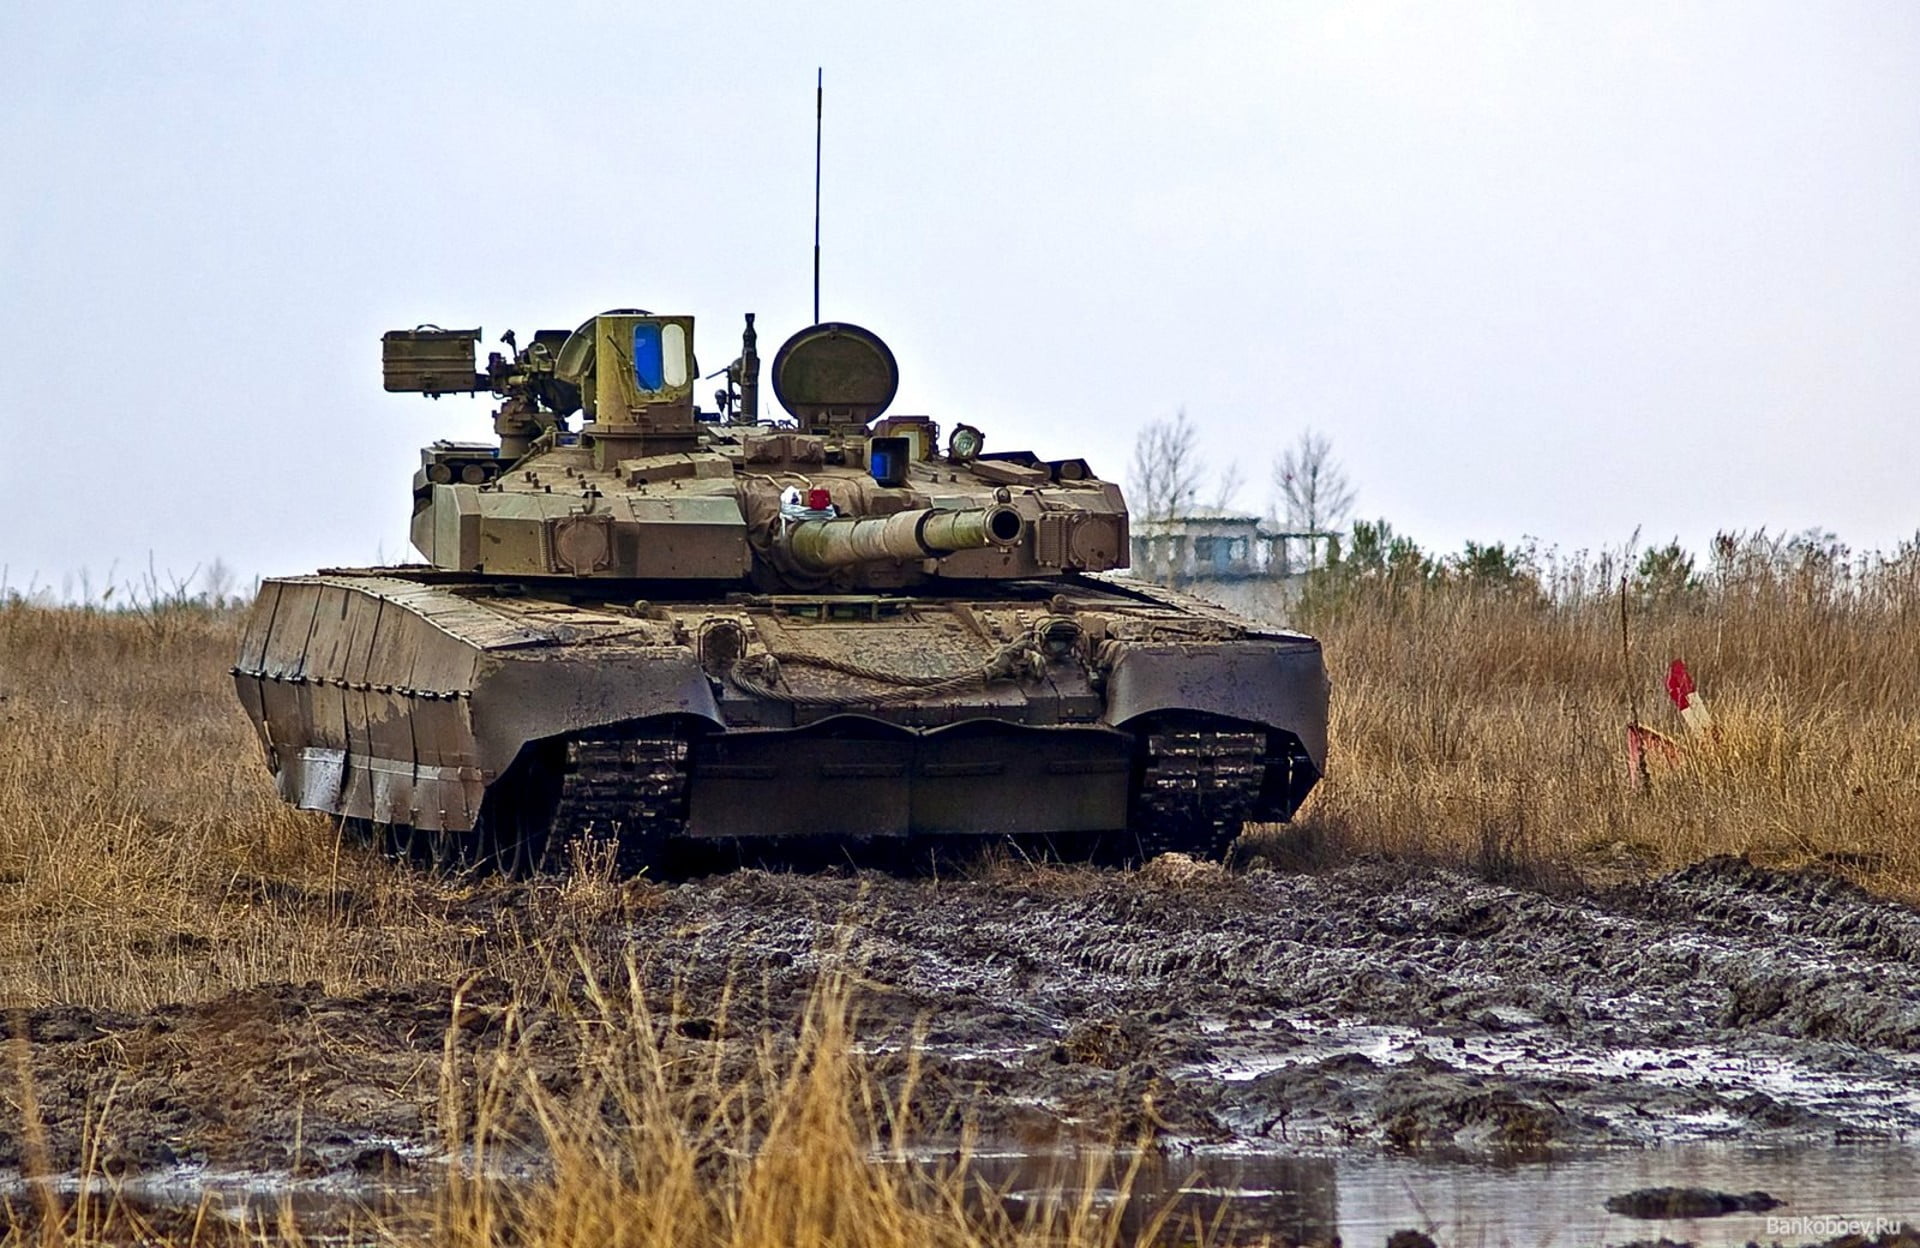 green battle tank, field, Ukraine, t-84 Oplot, army, military